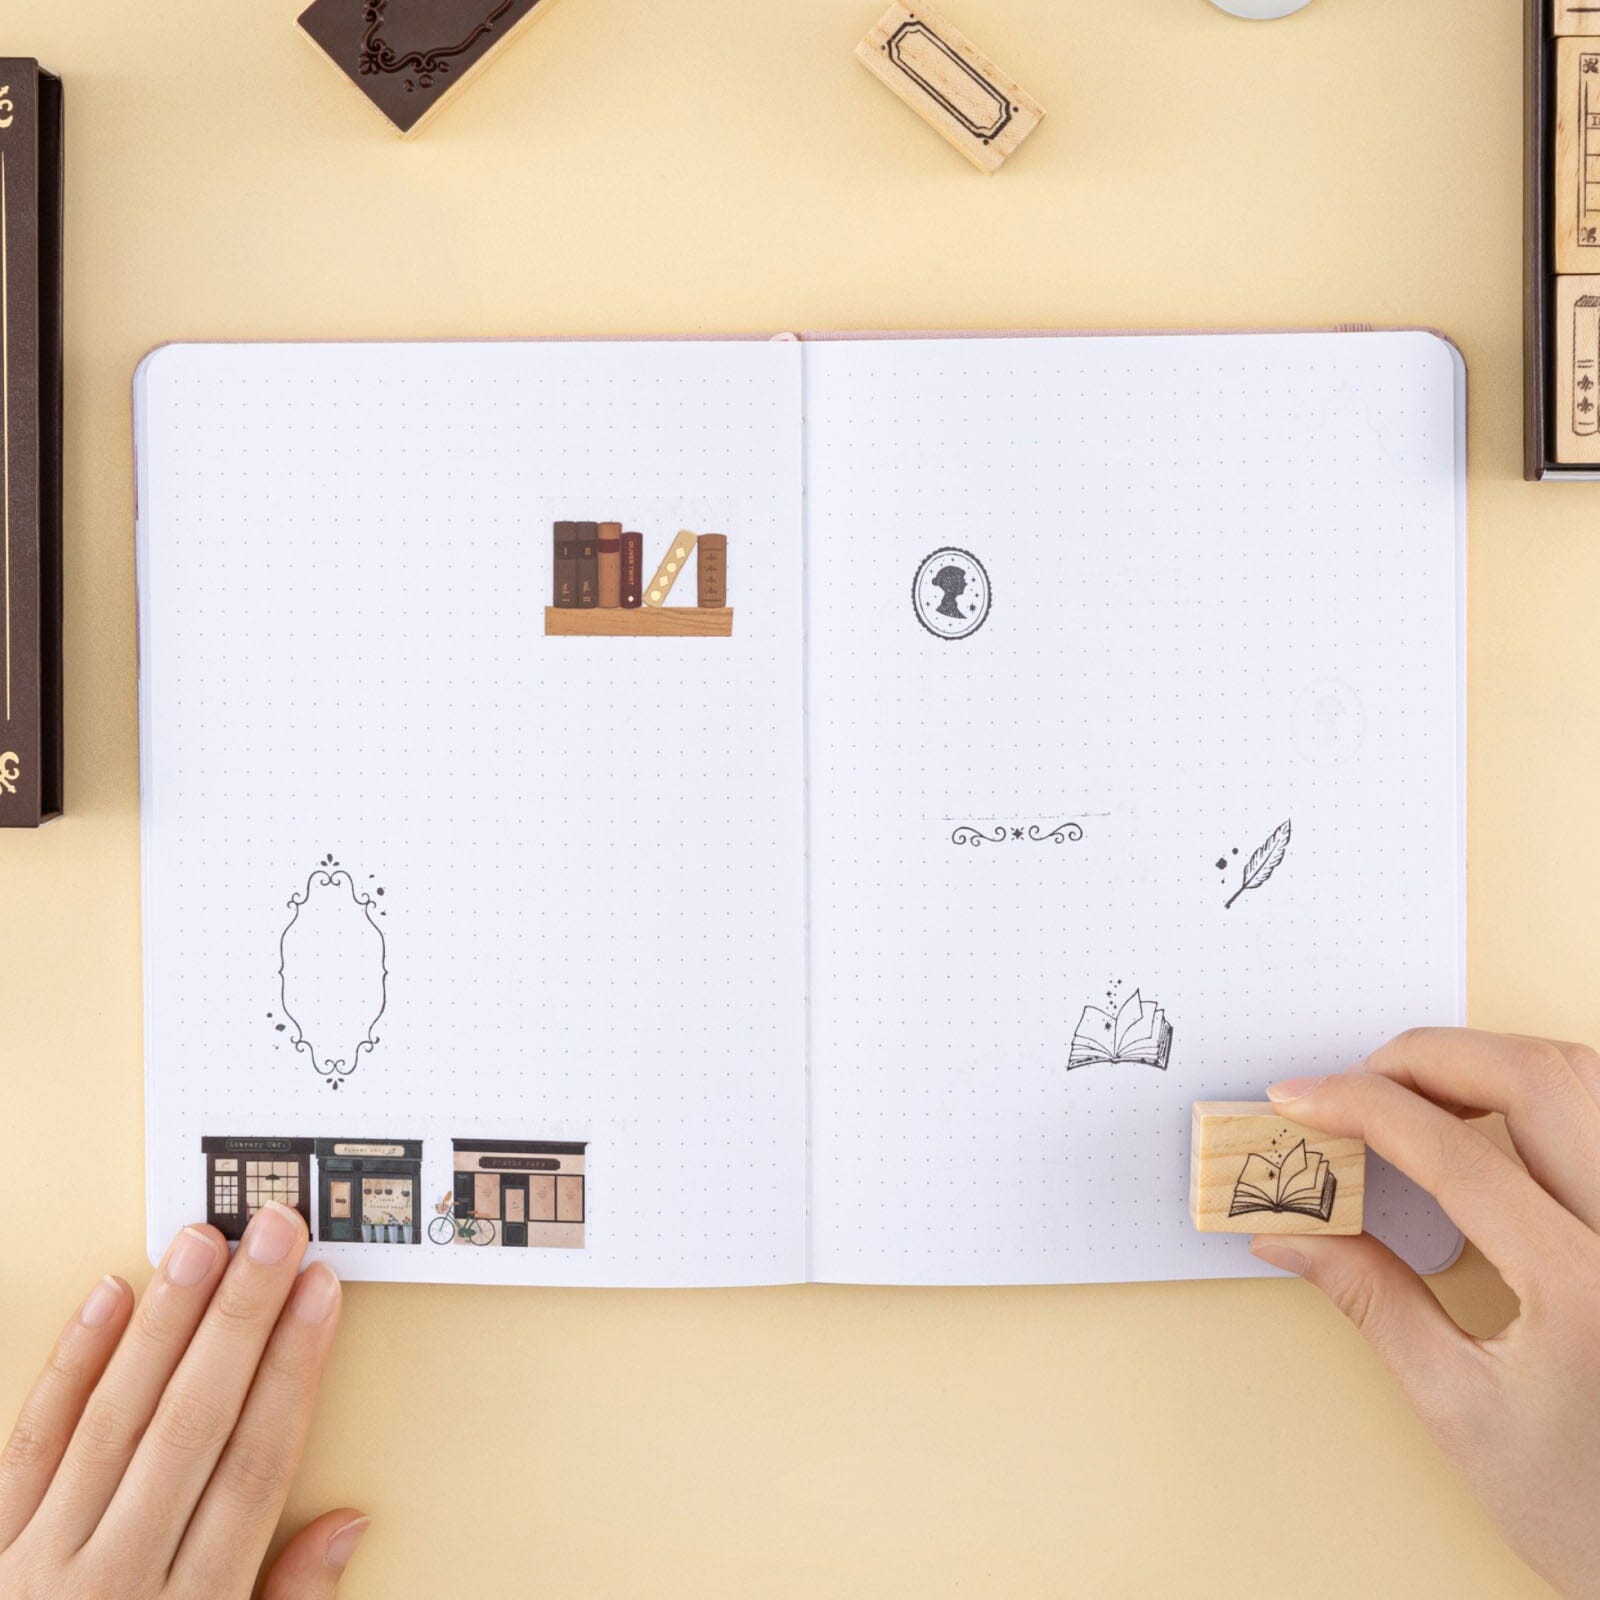 Tsuki ‘Our Stories’ Reading Journal Stamp Set ☾